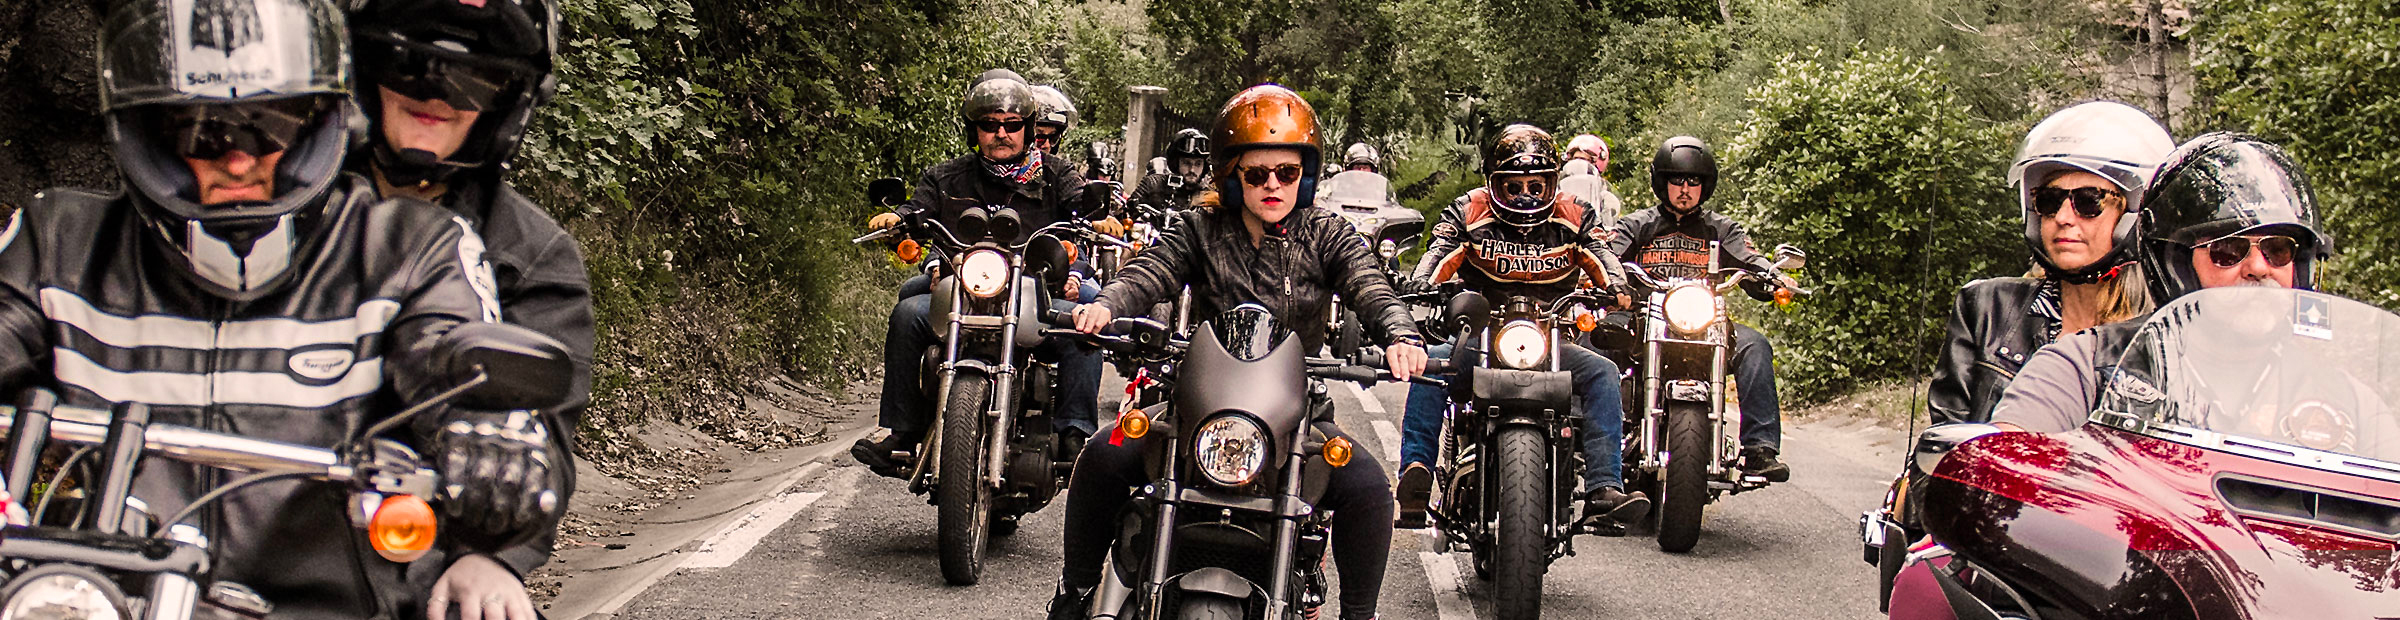 Harley-Davidson<sup>®</sup> Events